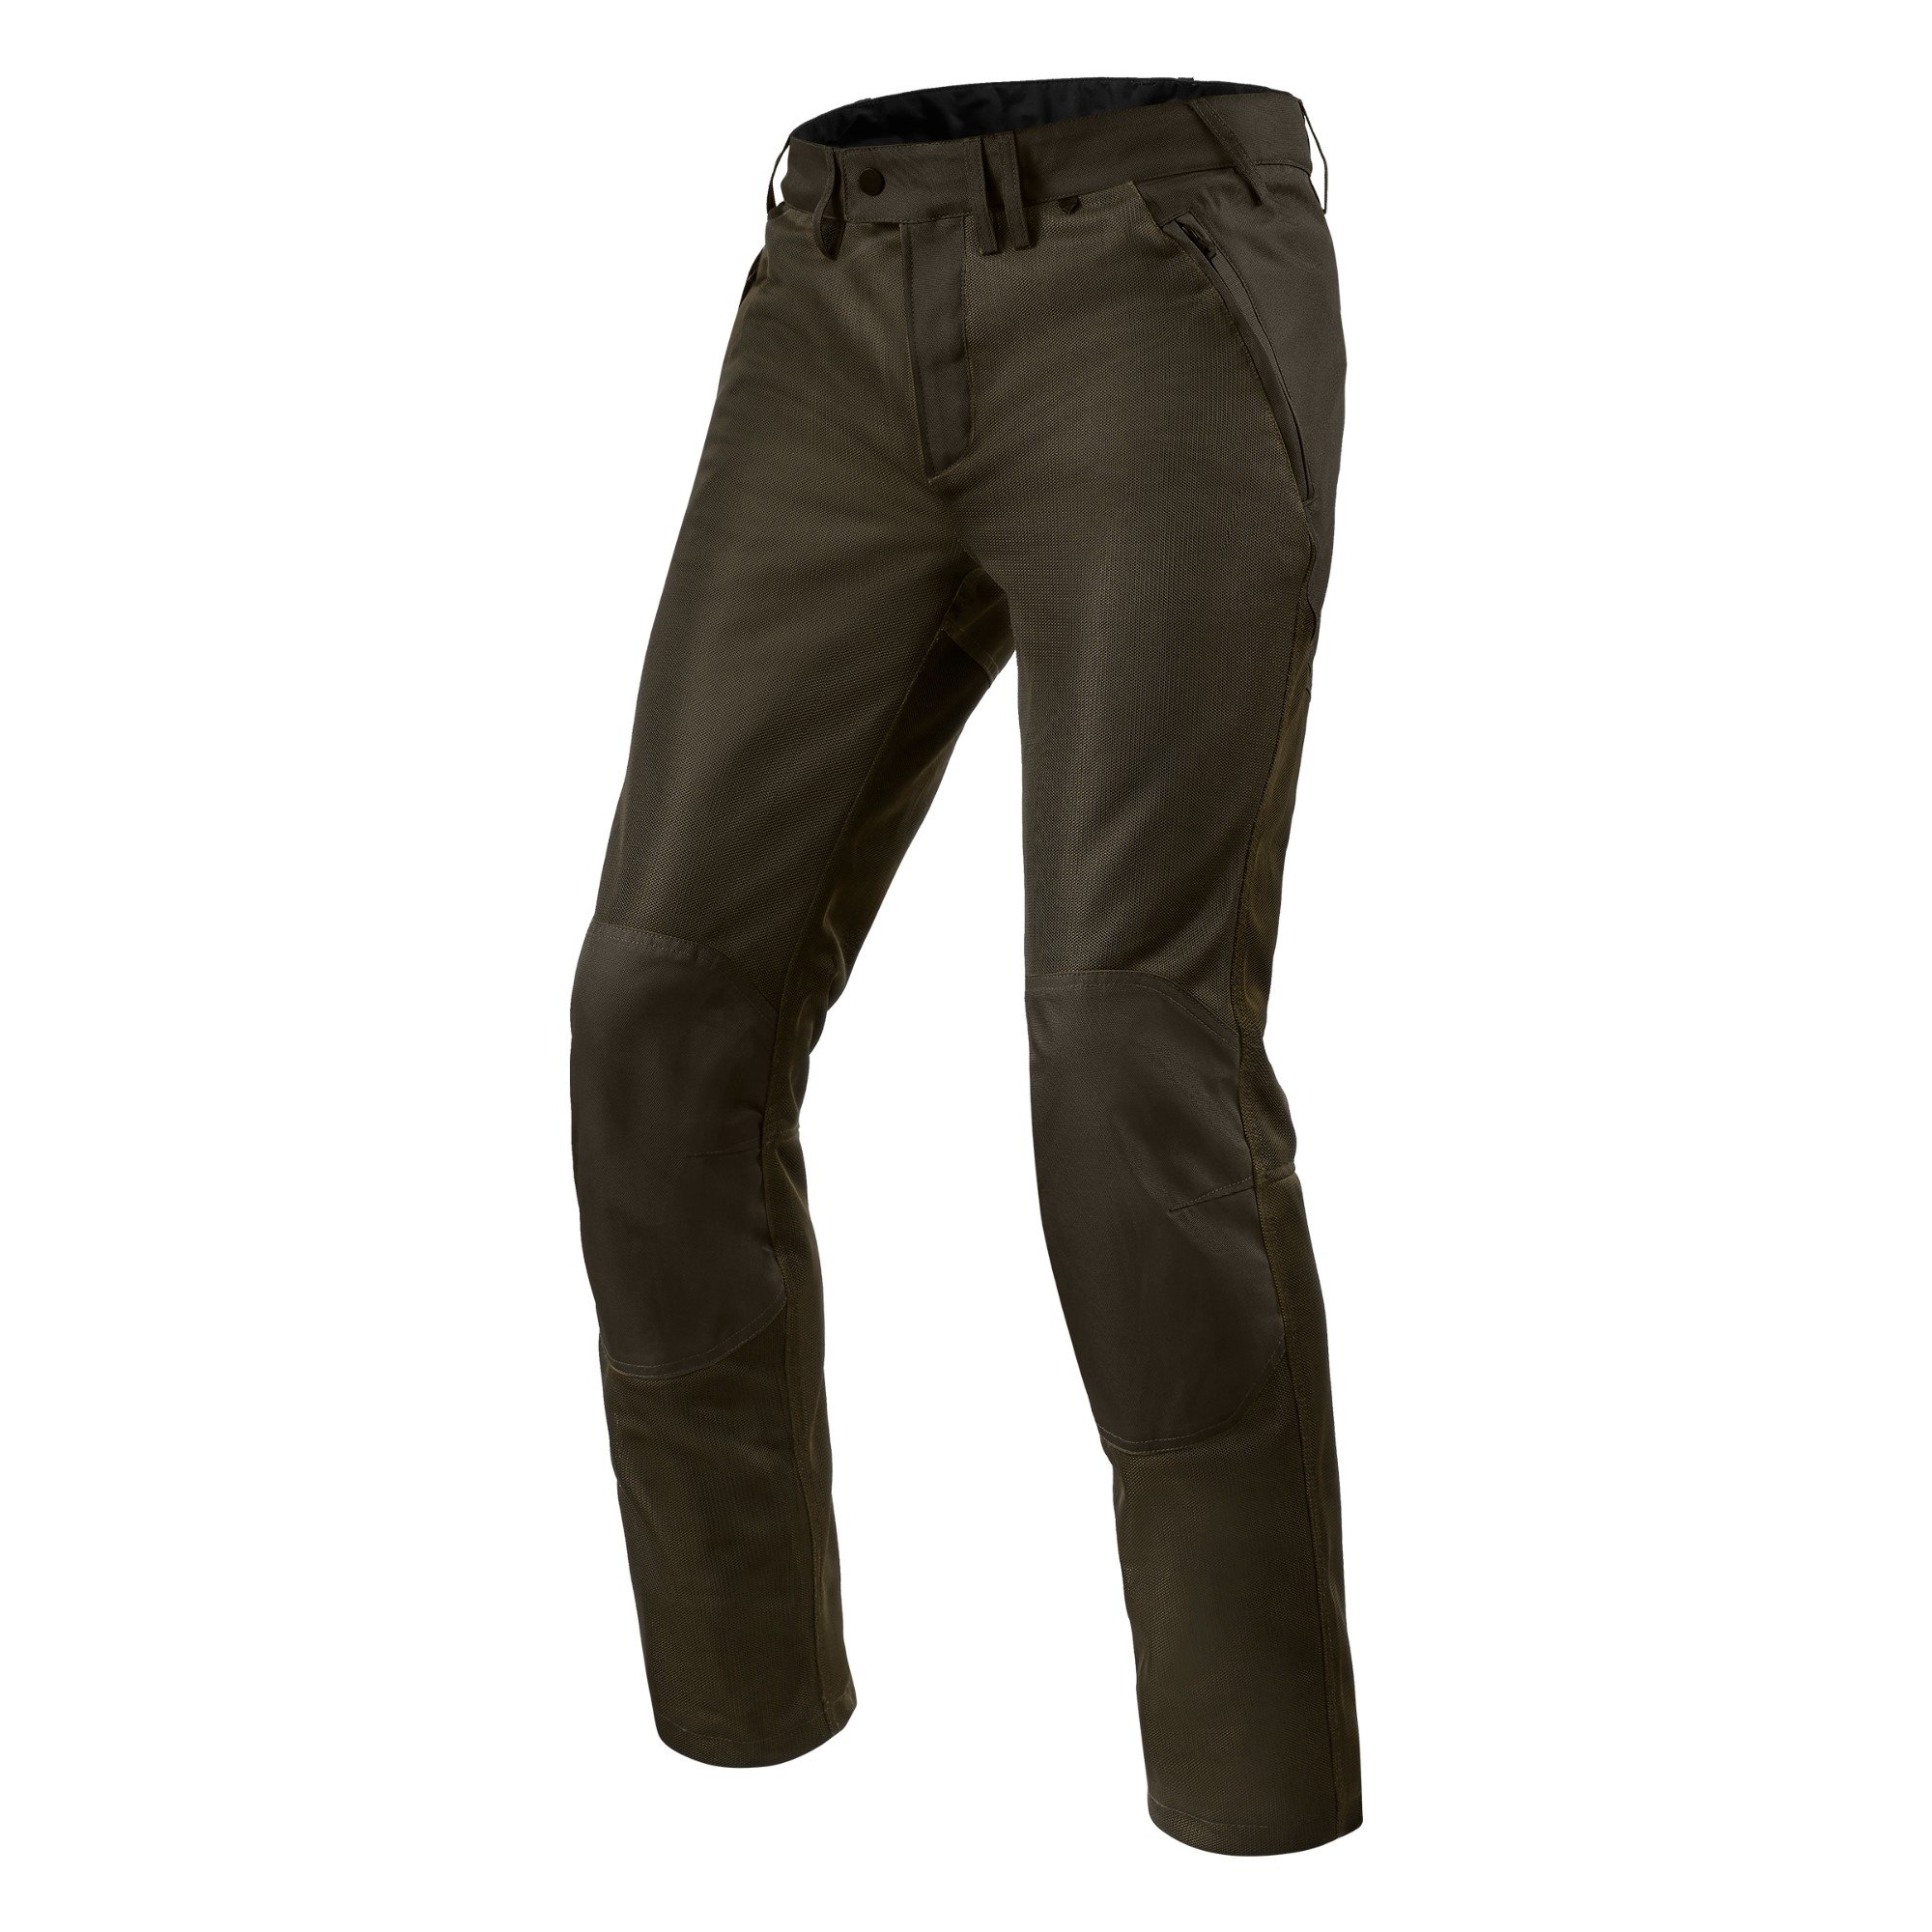 Image of REV'IT! Pants Eclipse 2 Black Olive Short Motorcycle Pants Size M EN